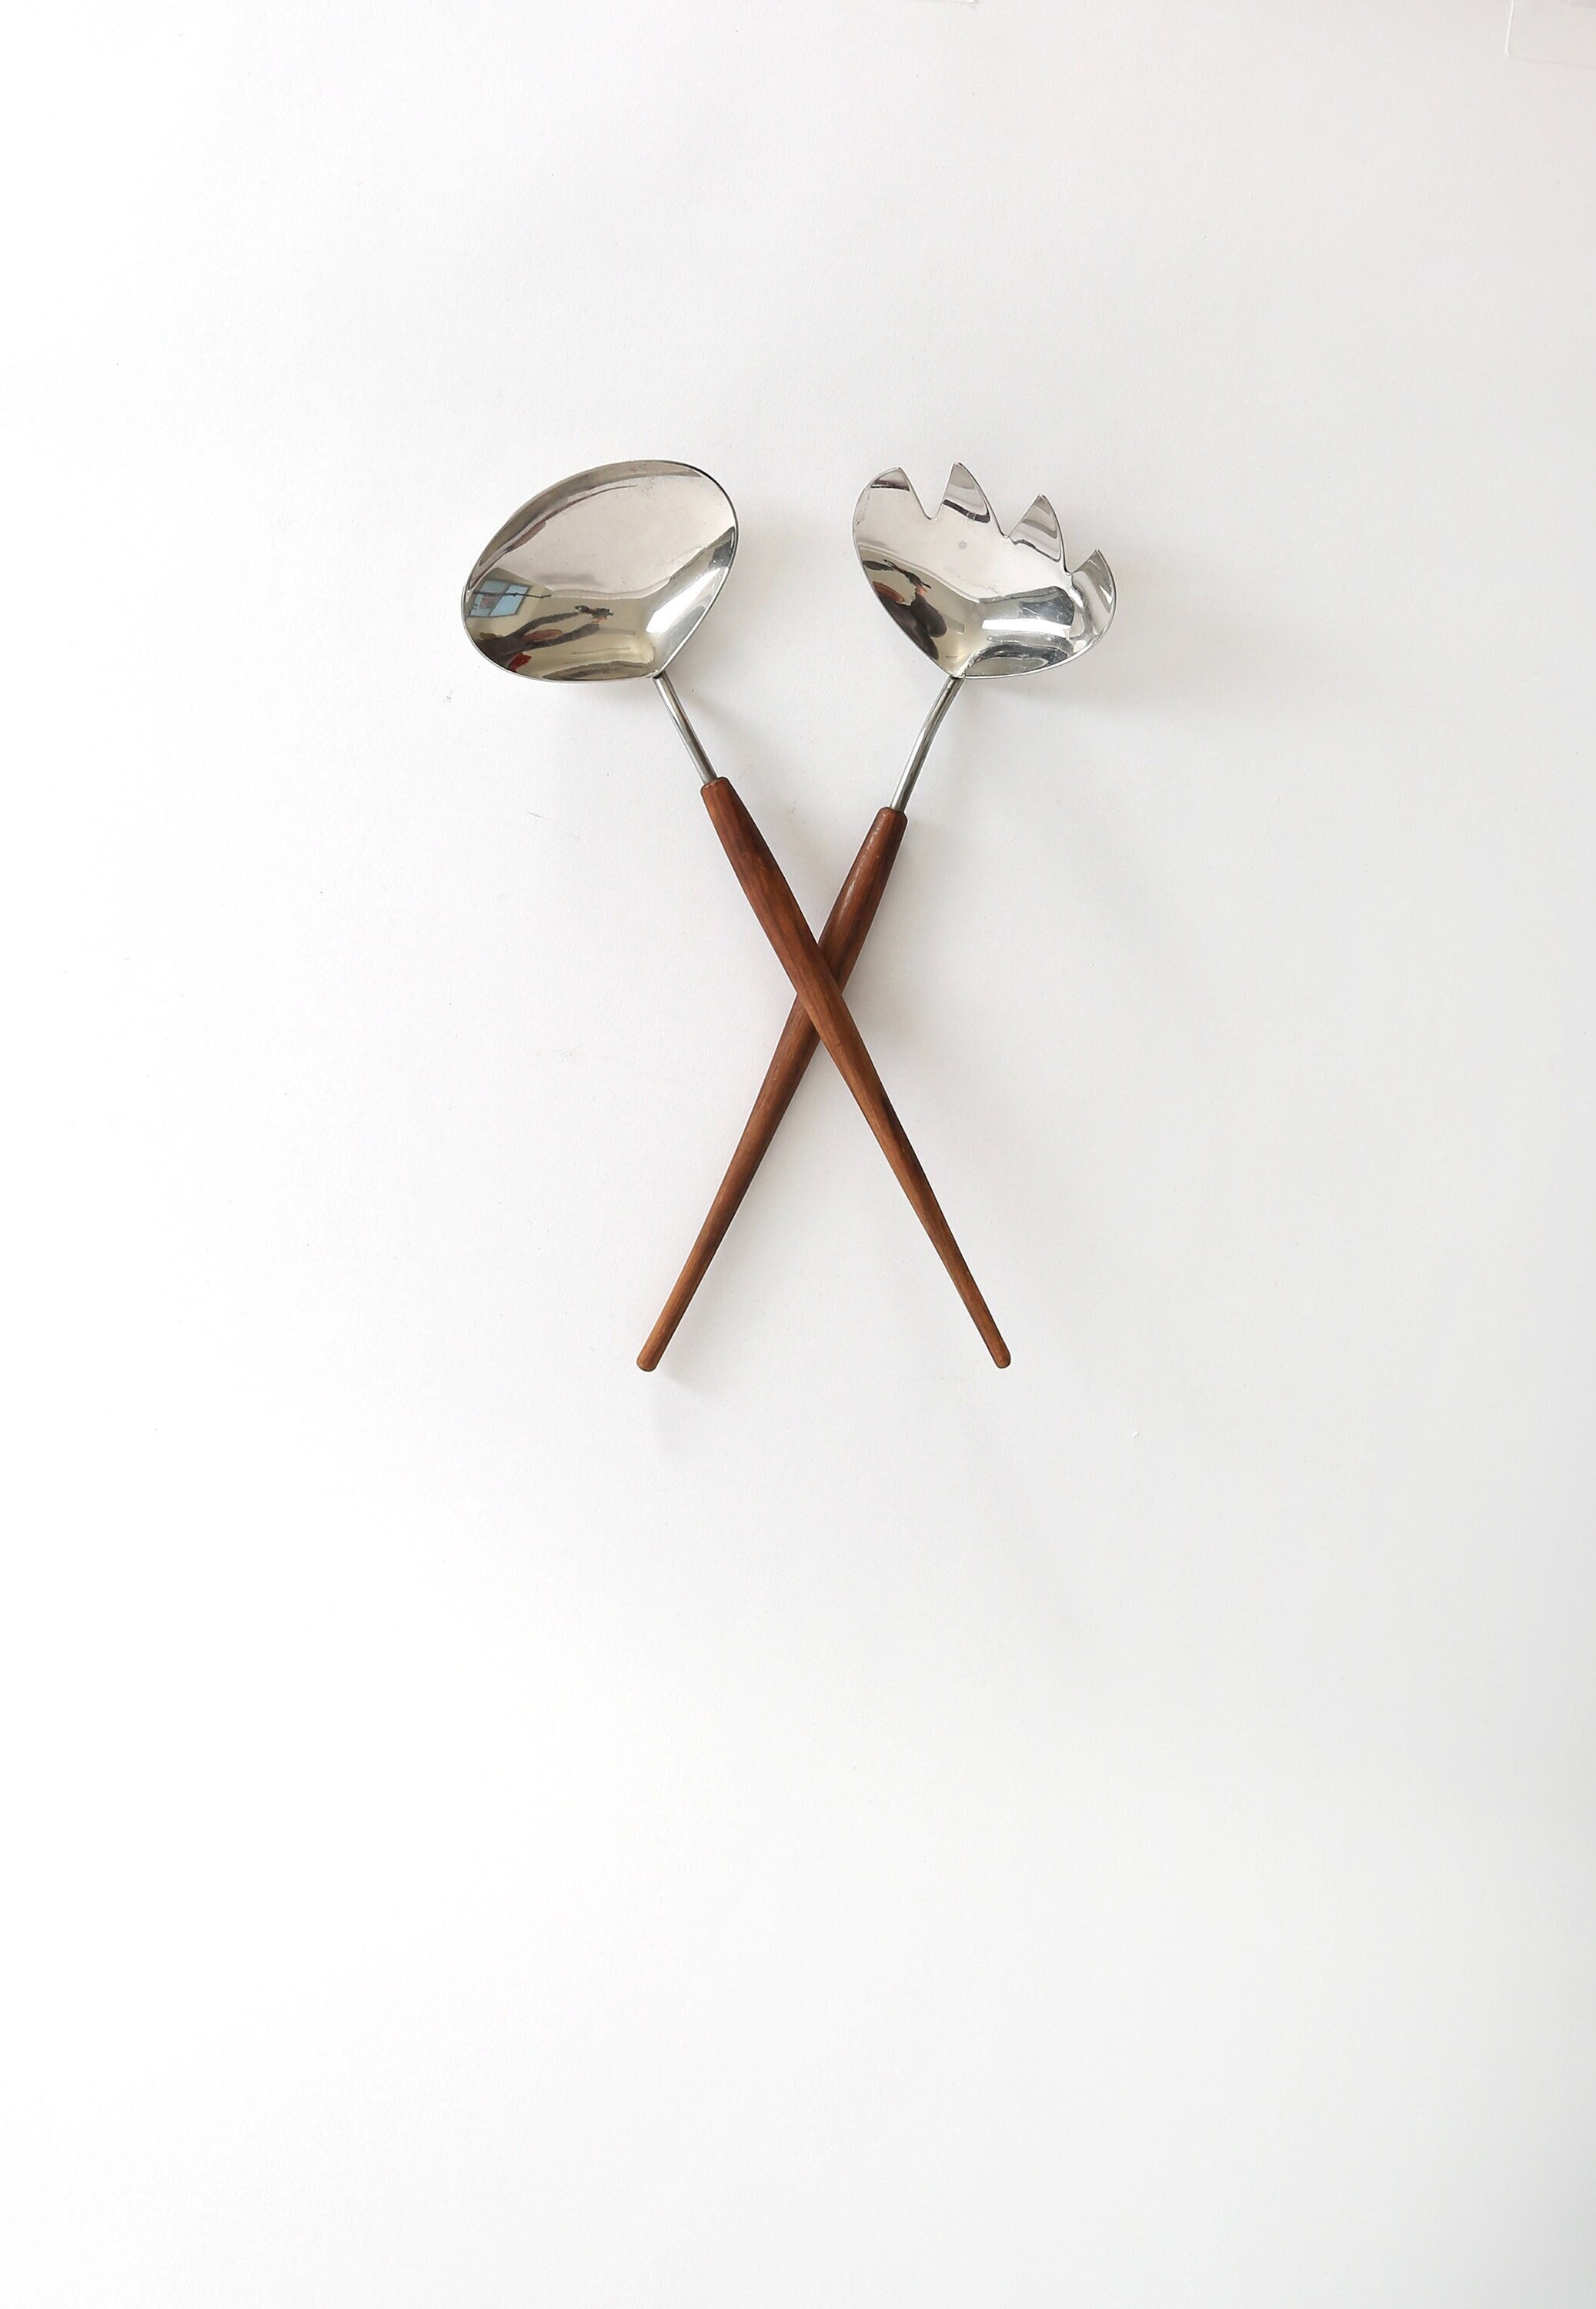 Wooden Spoons for Cooking, 8bPcs Teak Wood Cooking Utensil Set